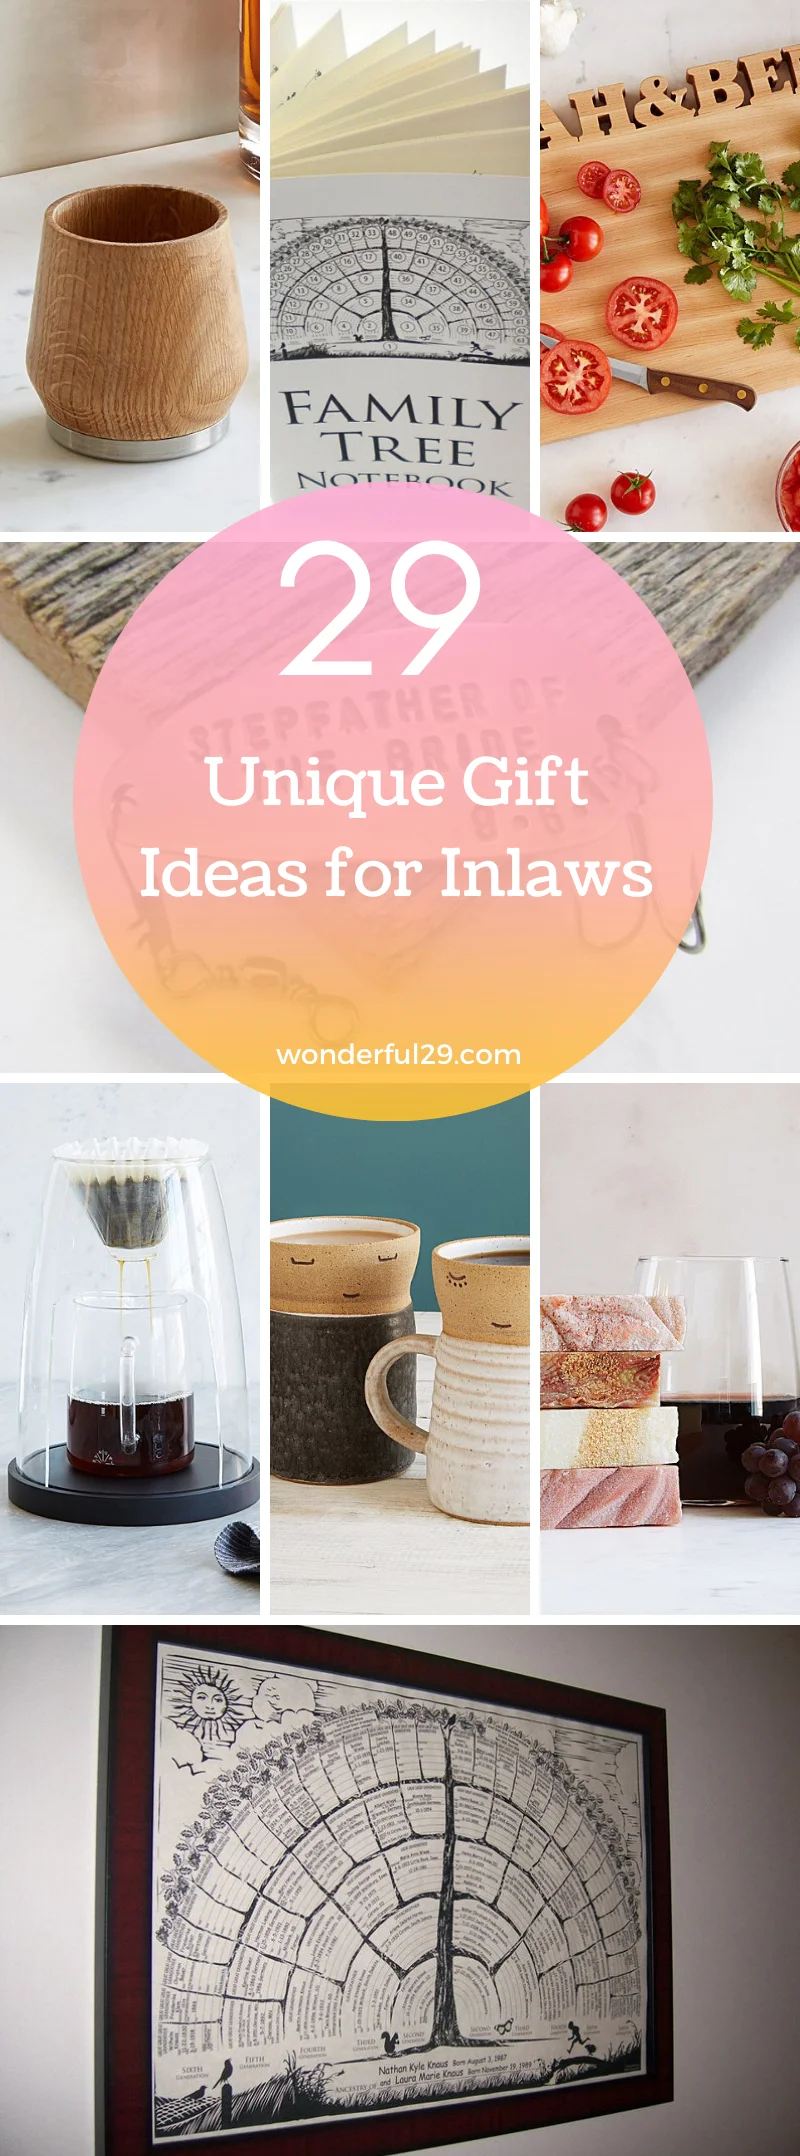 17 Unique Family Gift Ideas